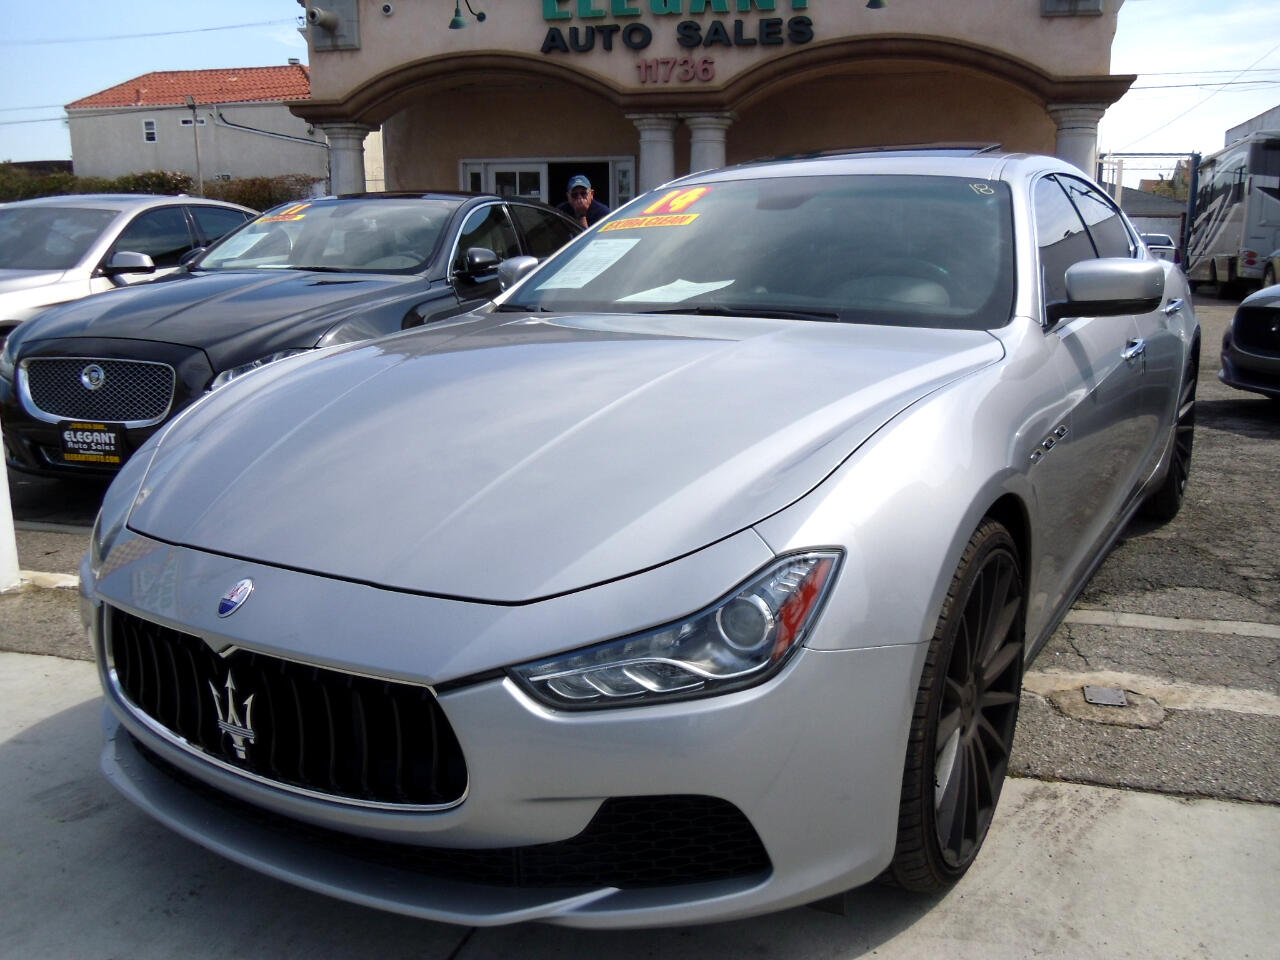 Maserati Ghibli 4dr Sdn 2014